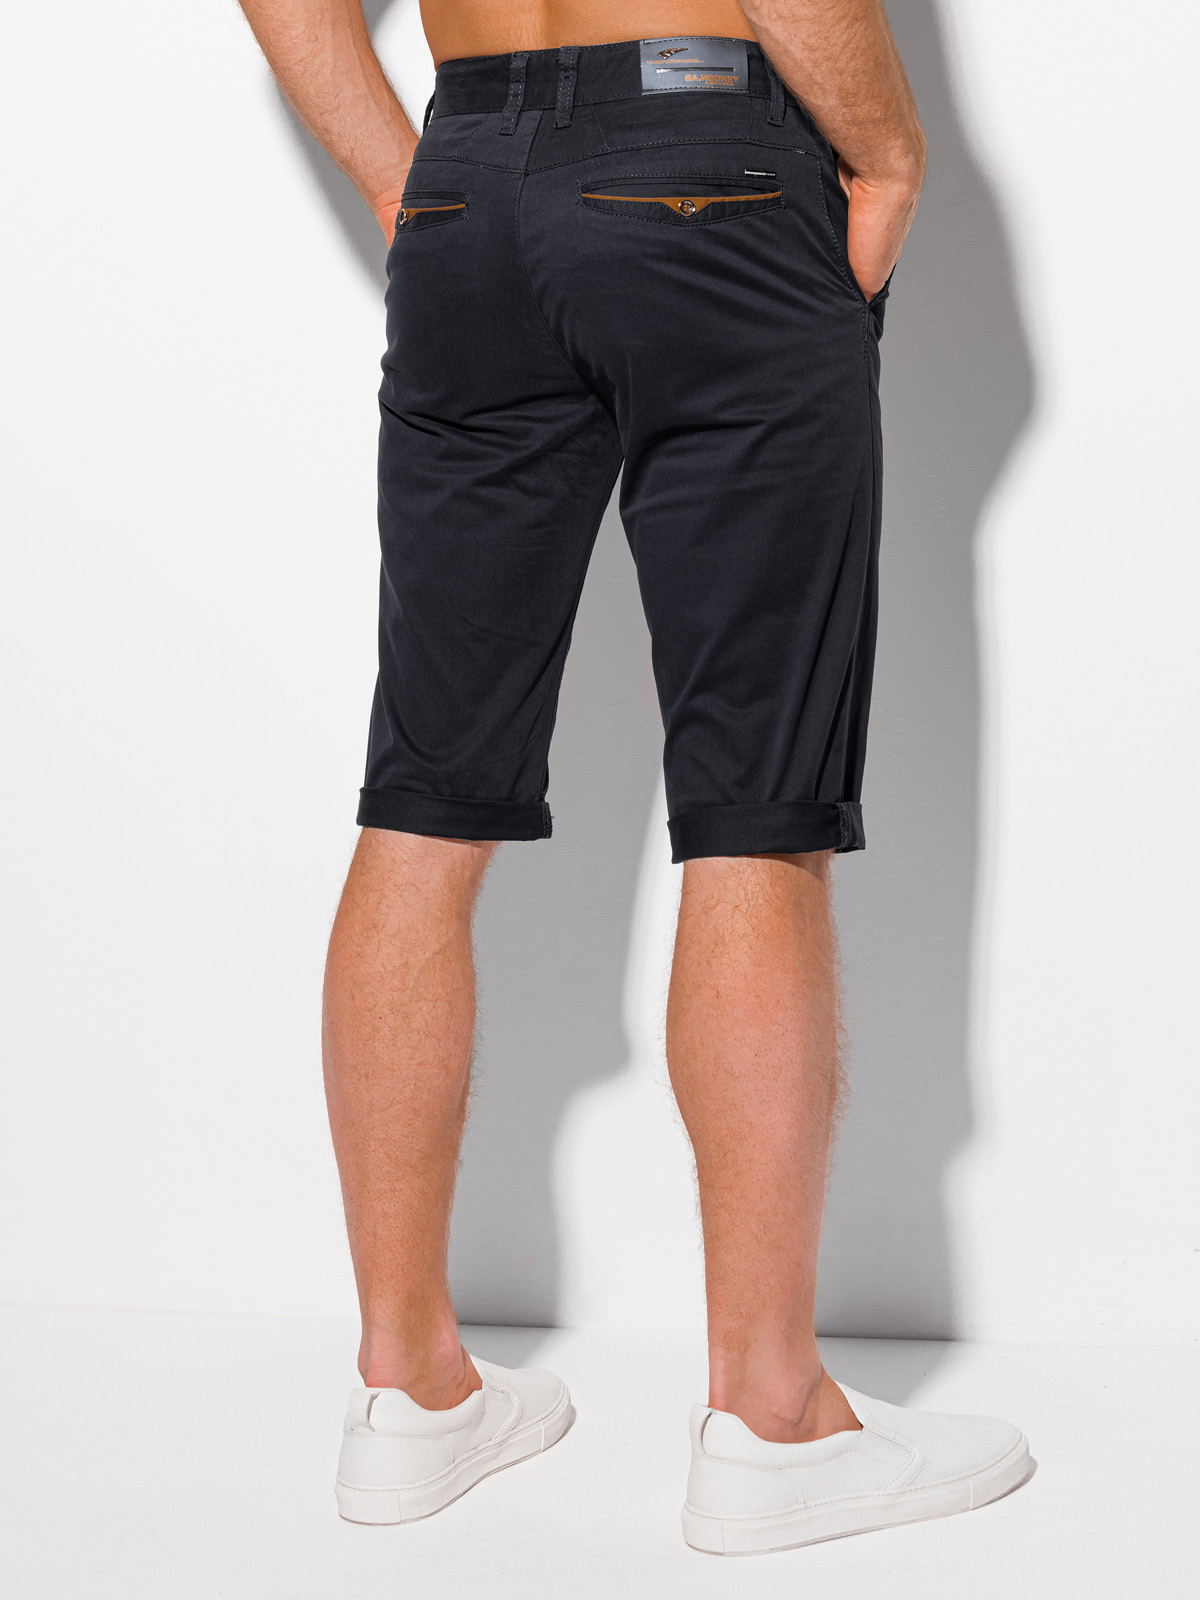 Men's chino shorts W374 - black | MODONE wholesale - Clothing For Men